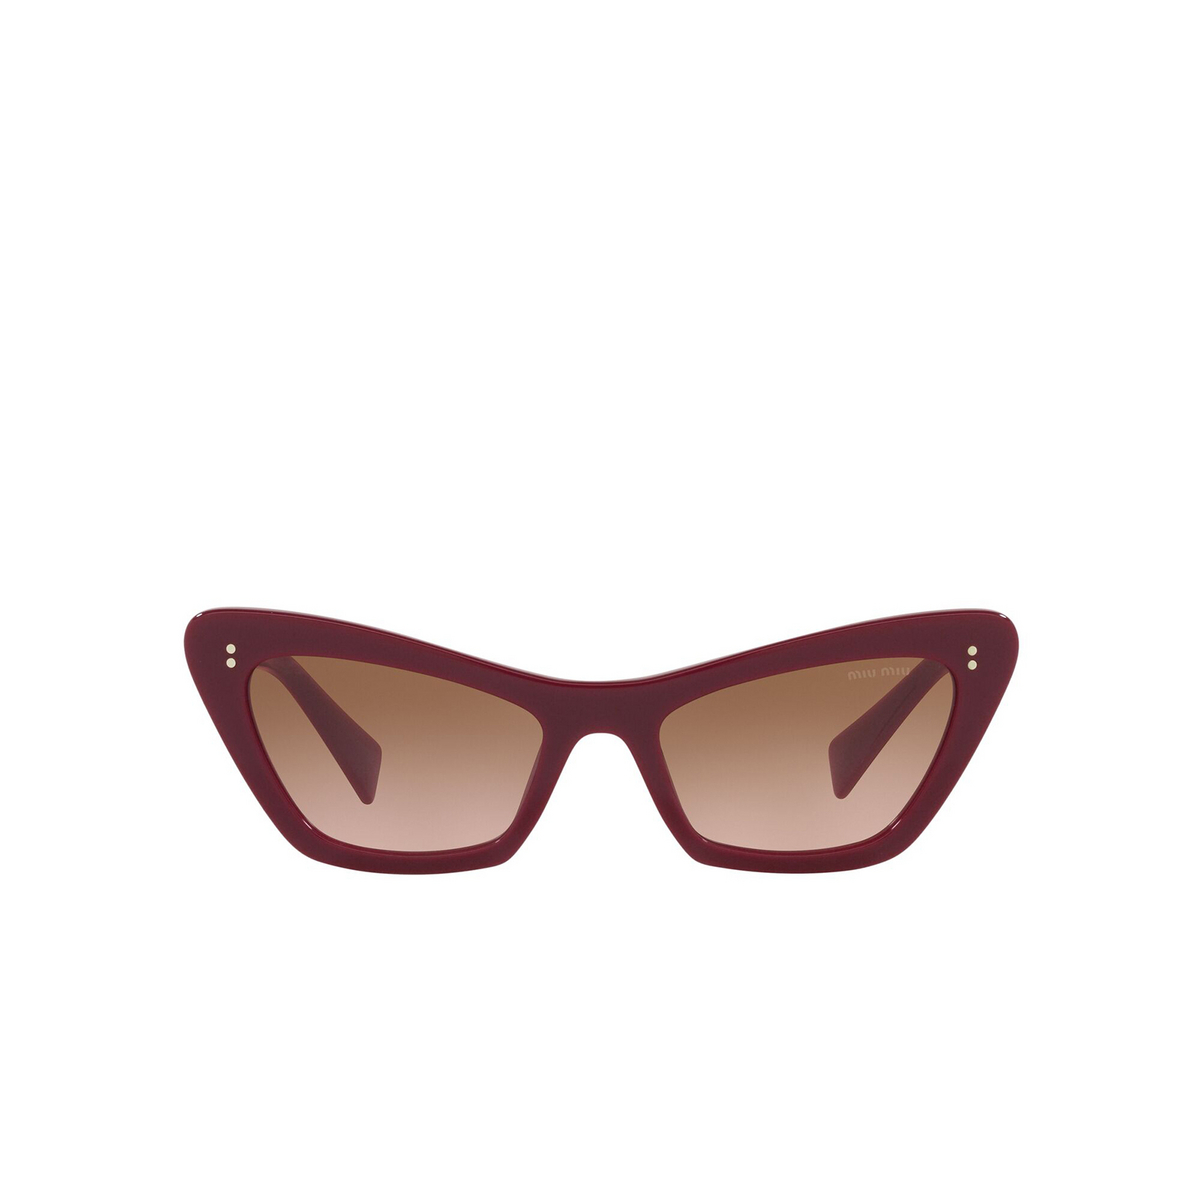 Miu Miu® Cat-eye Sunglasses: MU 03XS color Bordeaux USH0A6 - front view.